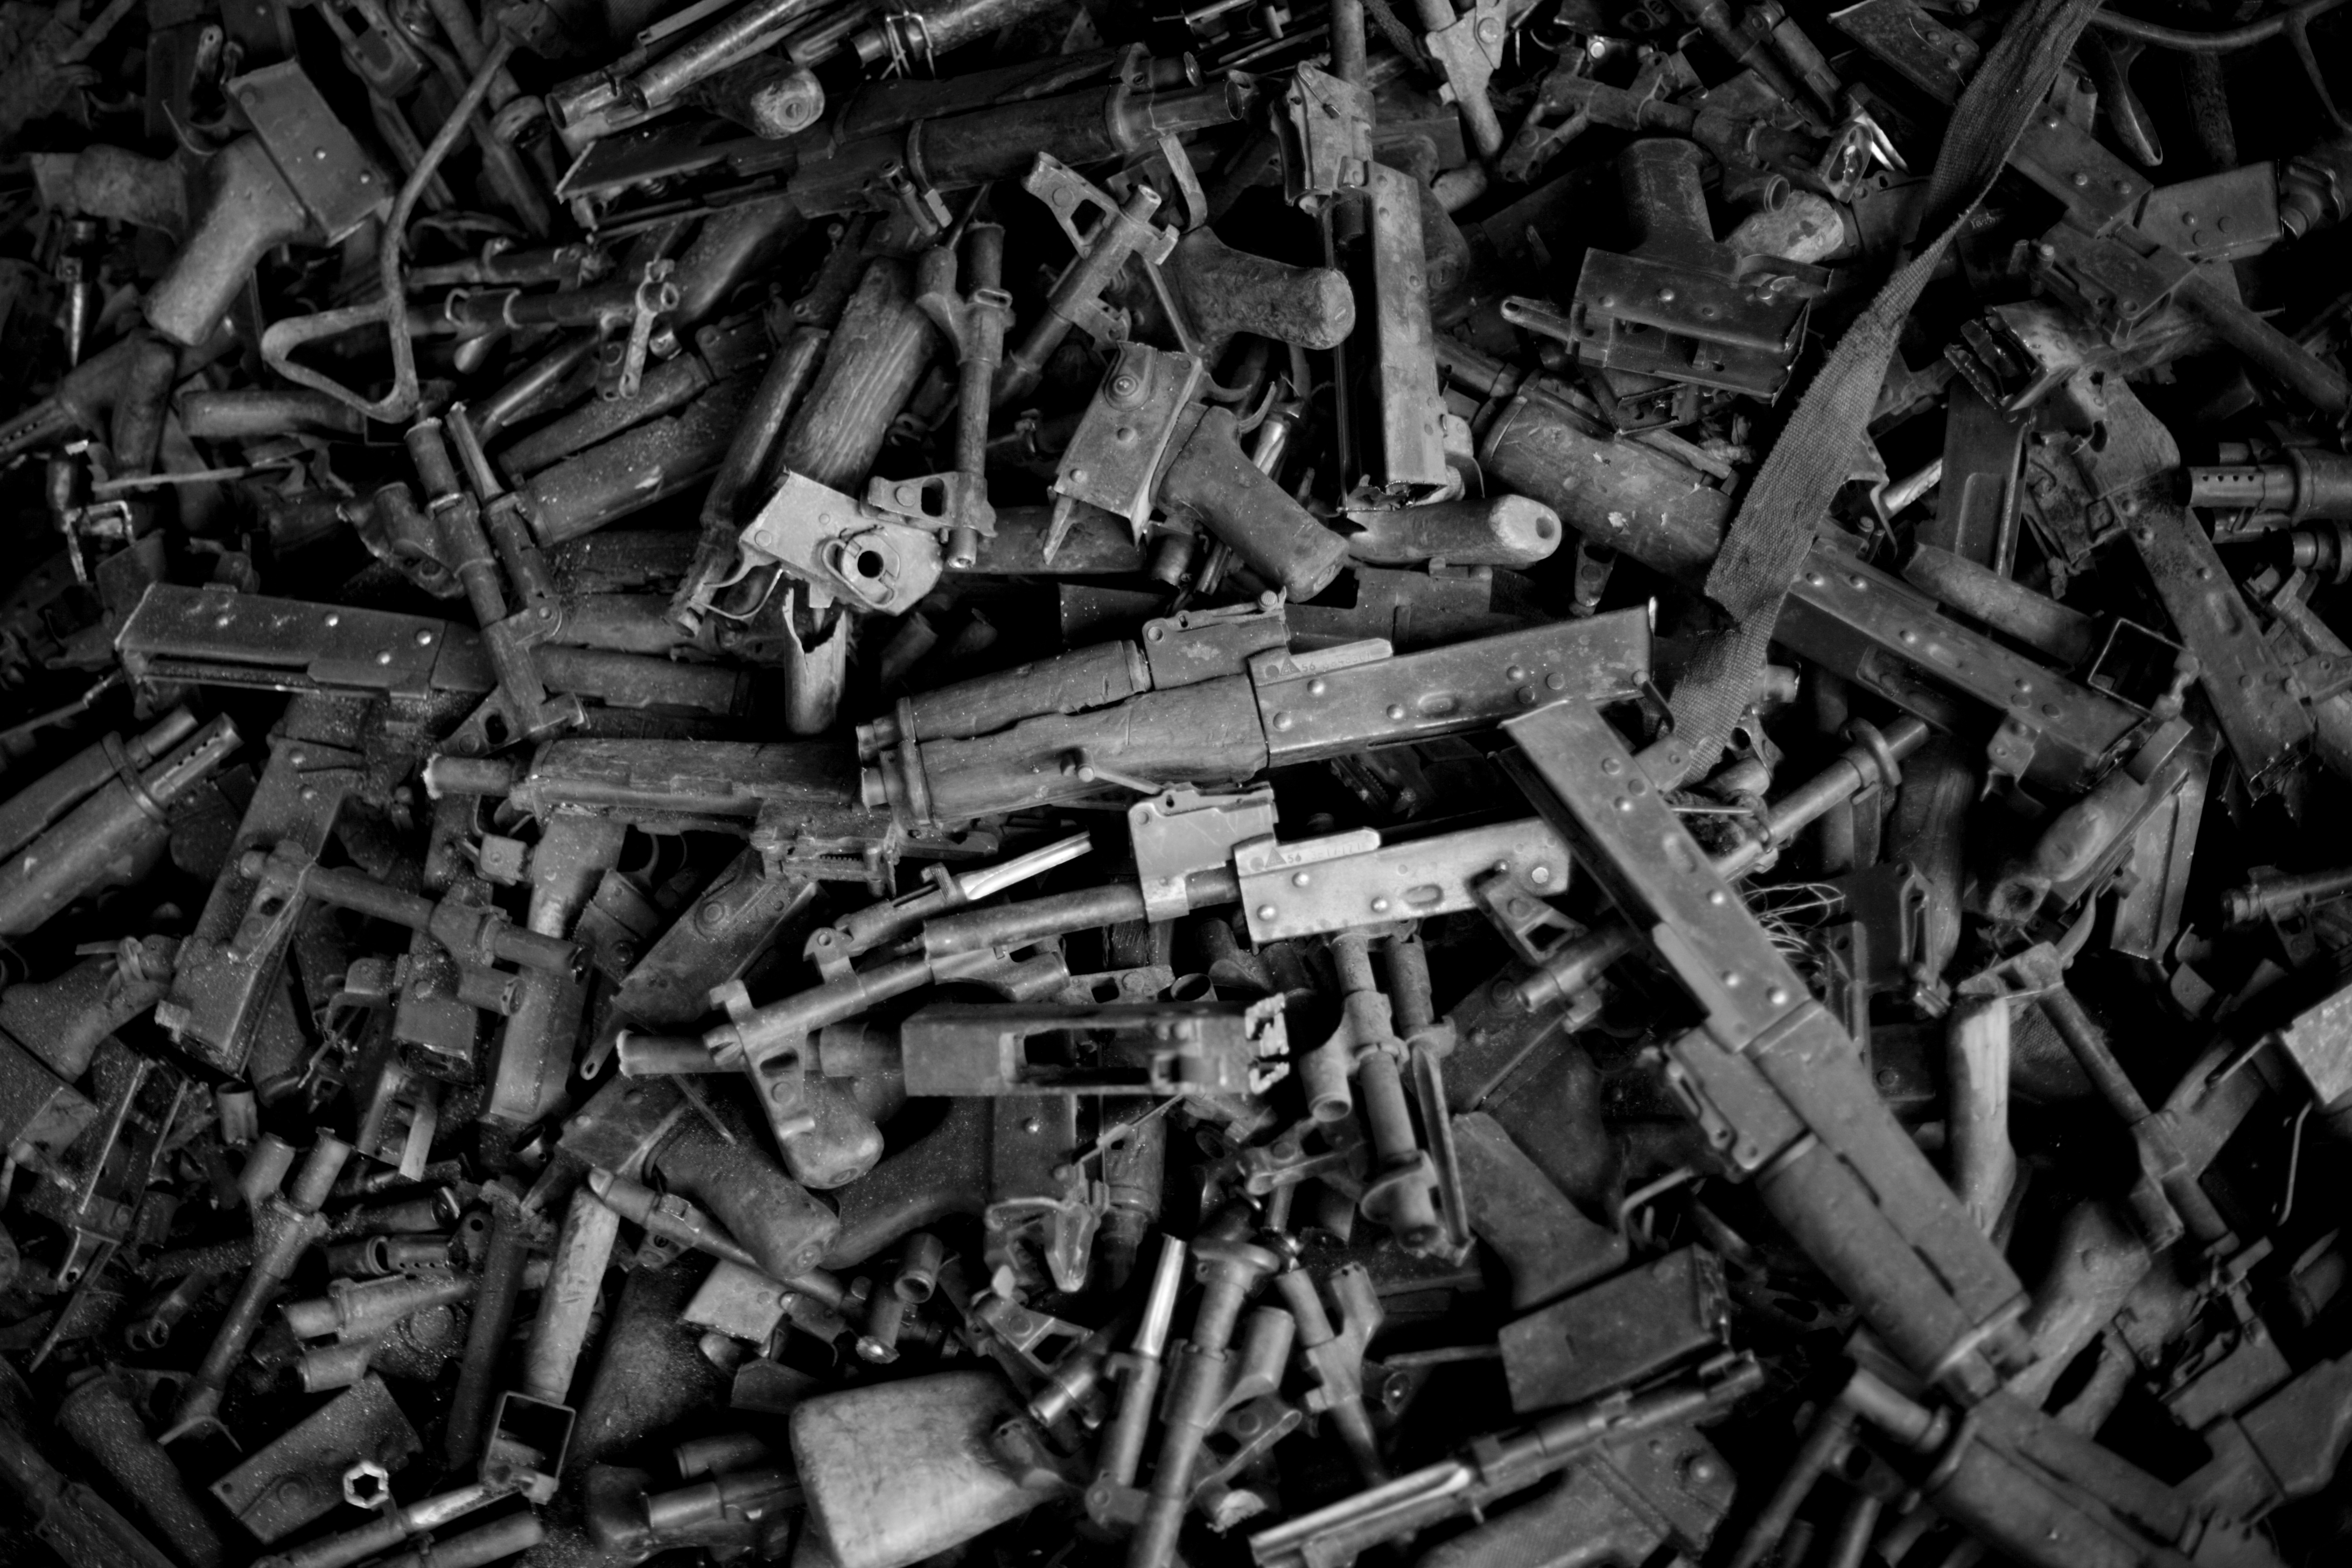 A stockpile of weapons. Photo: Moises Saman